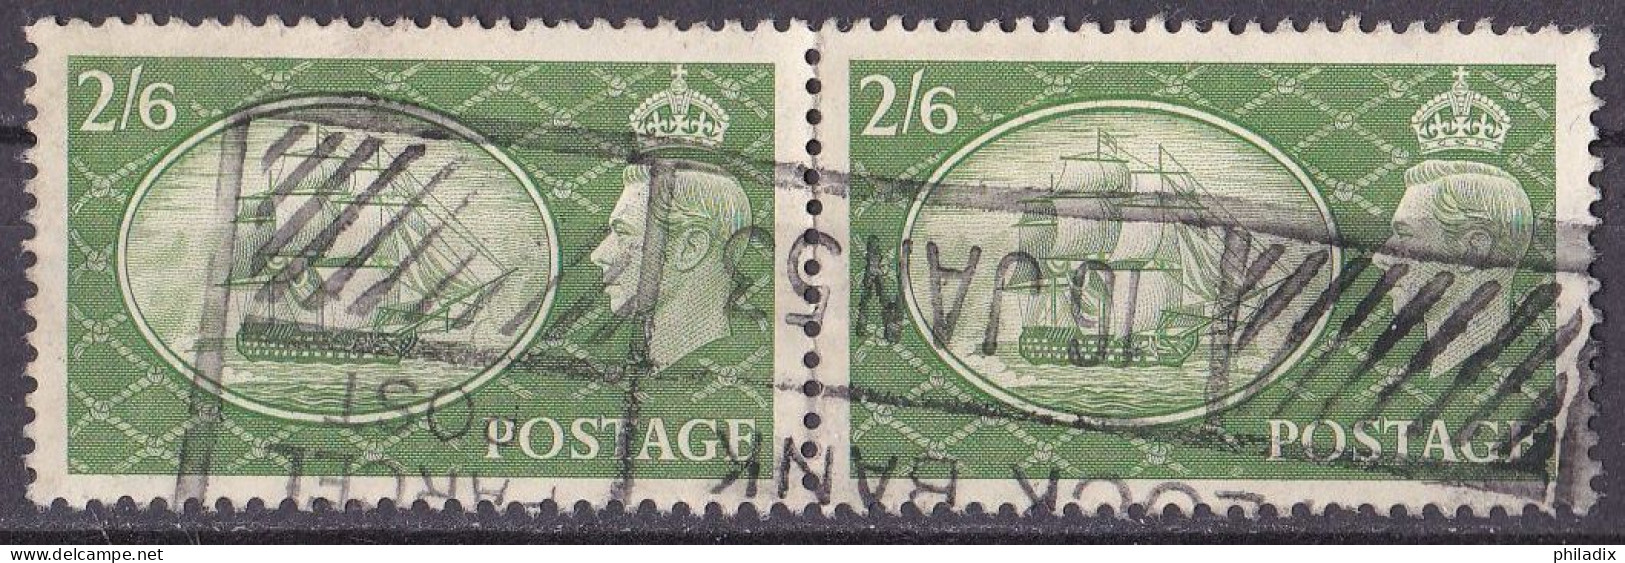 Großbritannien Marke Von 1951 O/used (A5-16) - Used Stamps